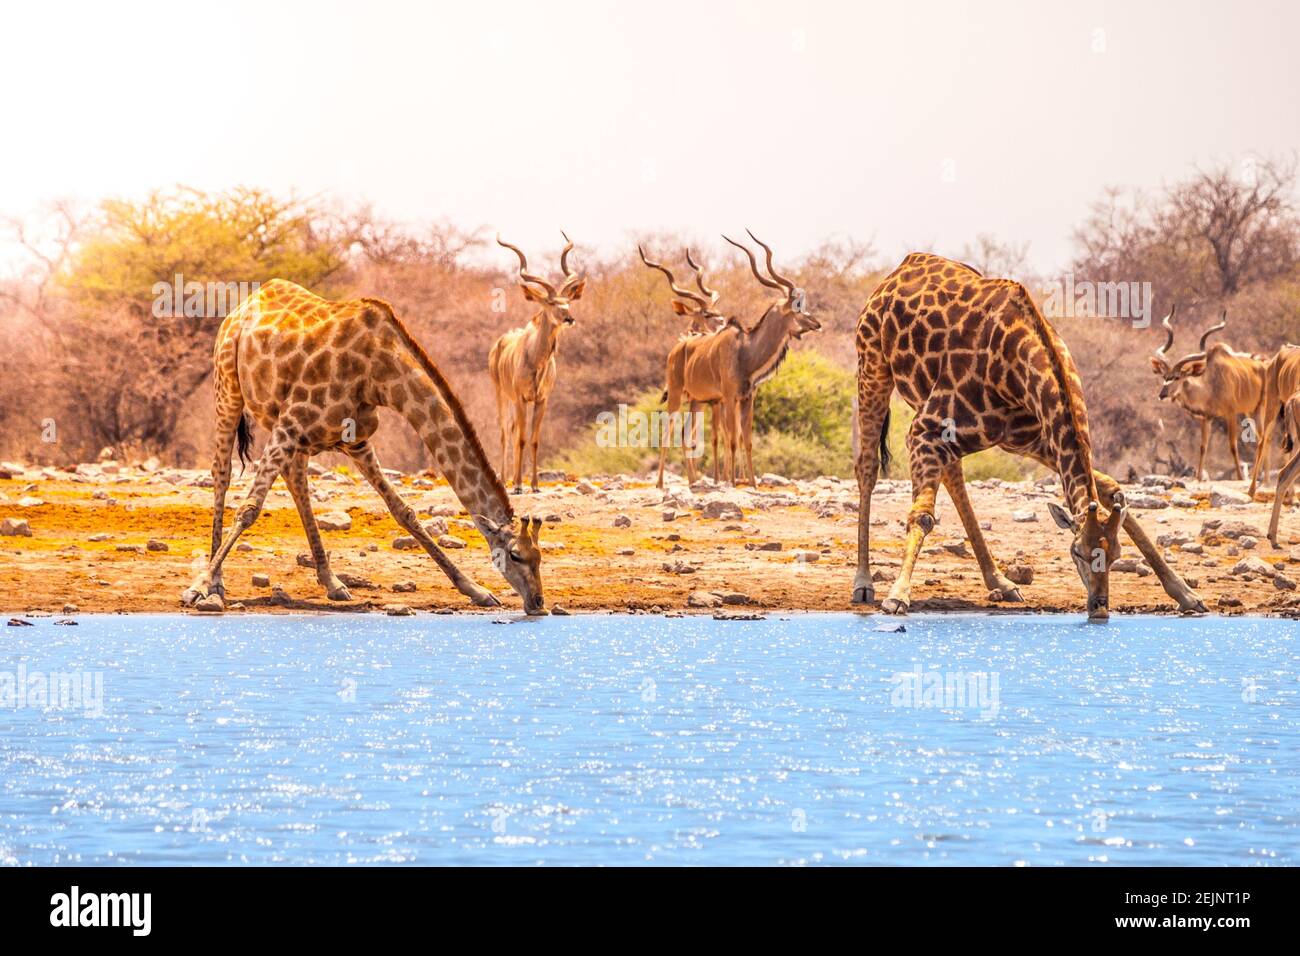 Two giraffes drinking water Stock Photo